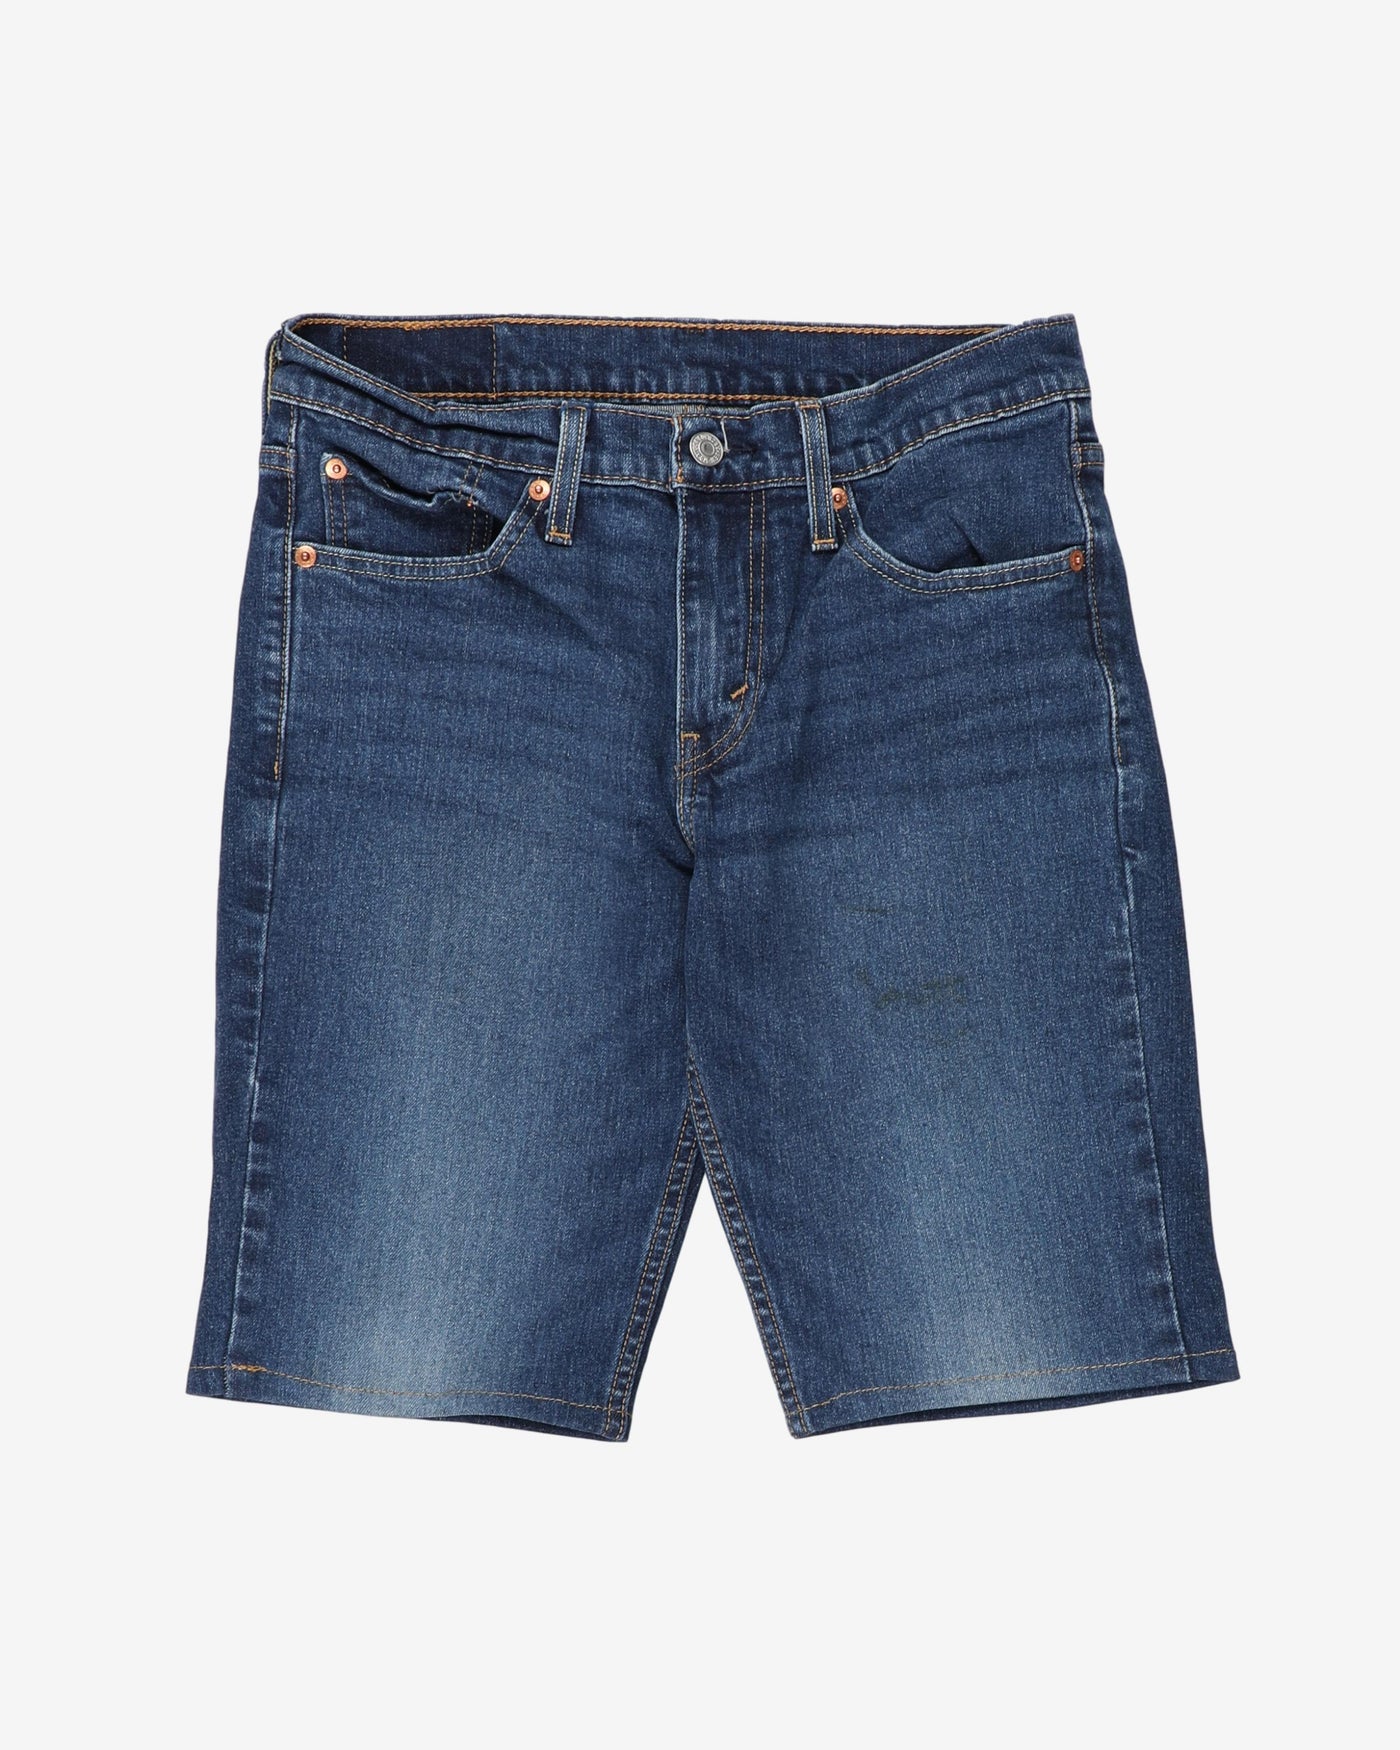 Levis Blue  Denim  Shorts - W 30